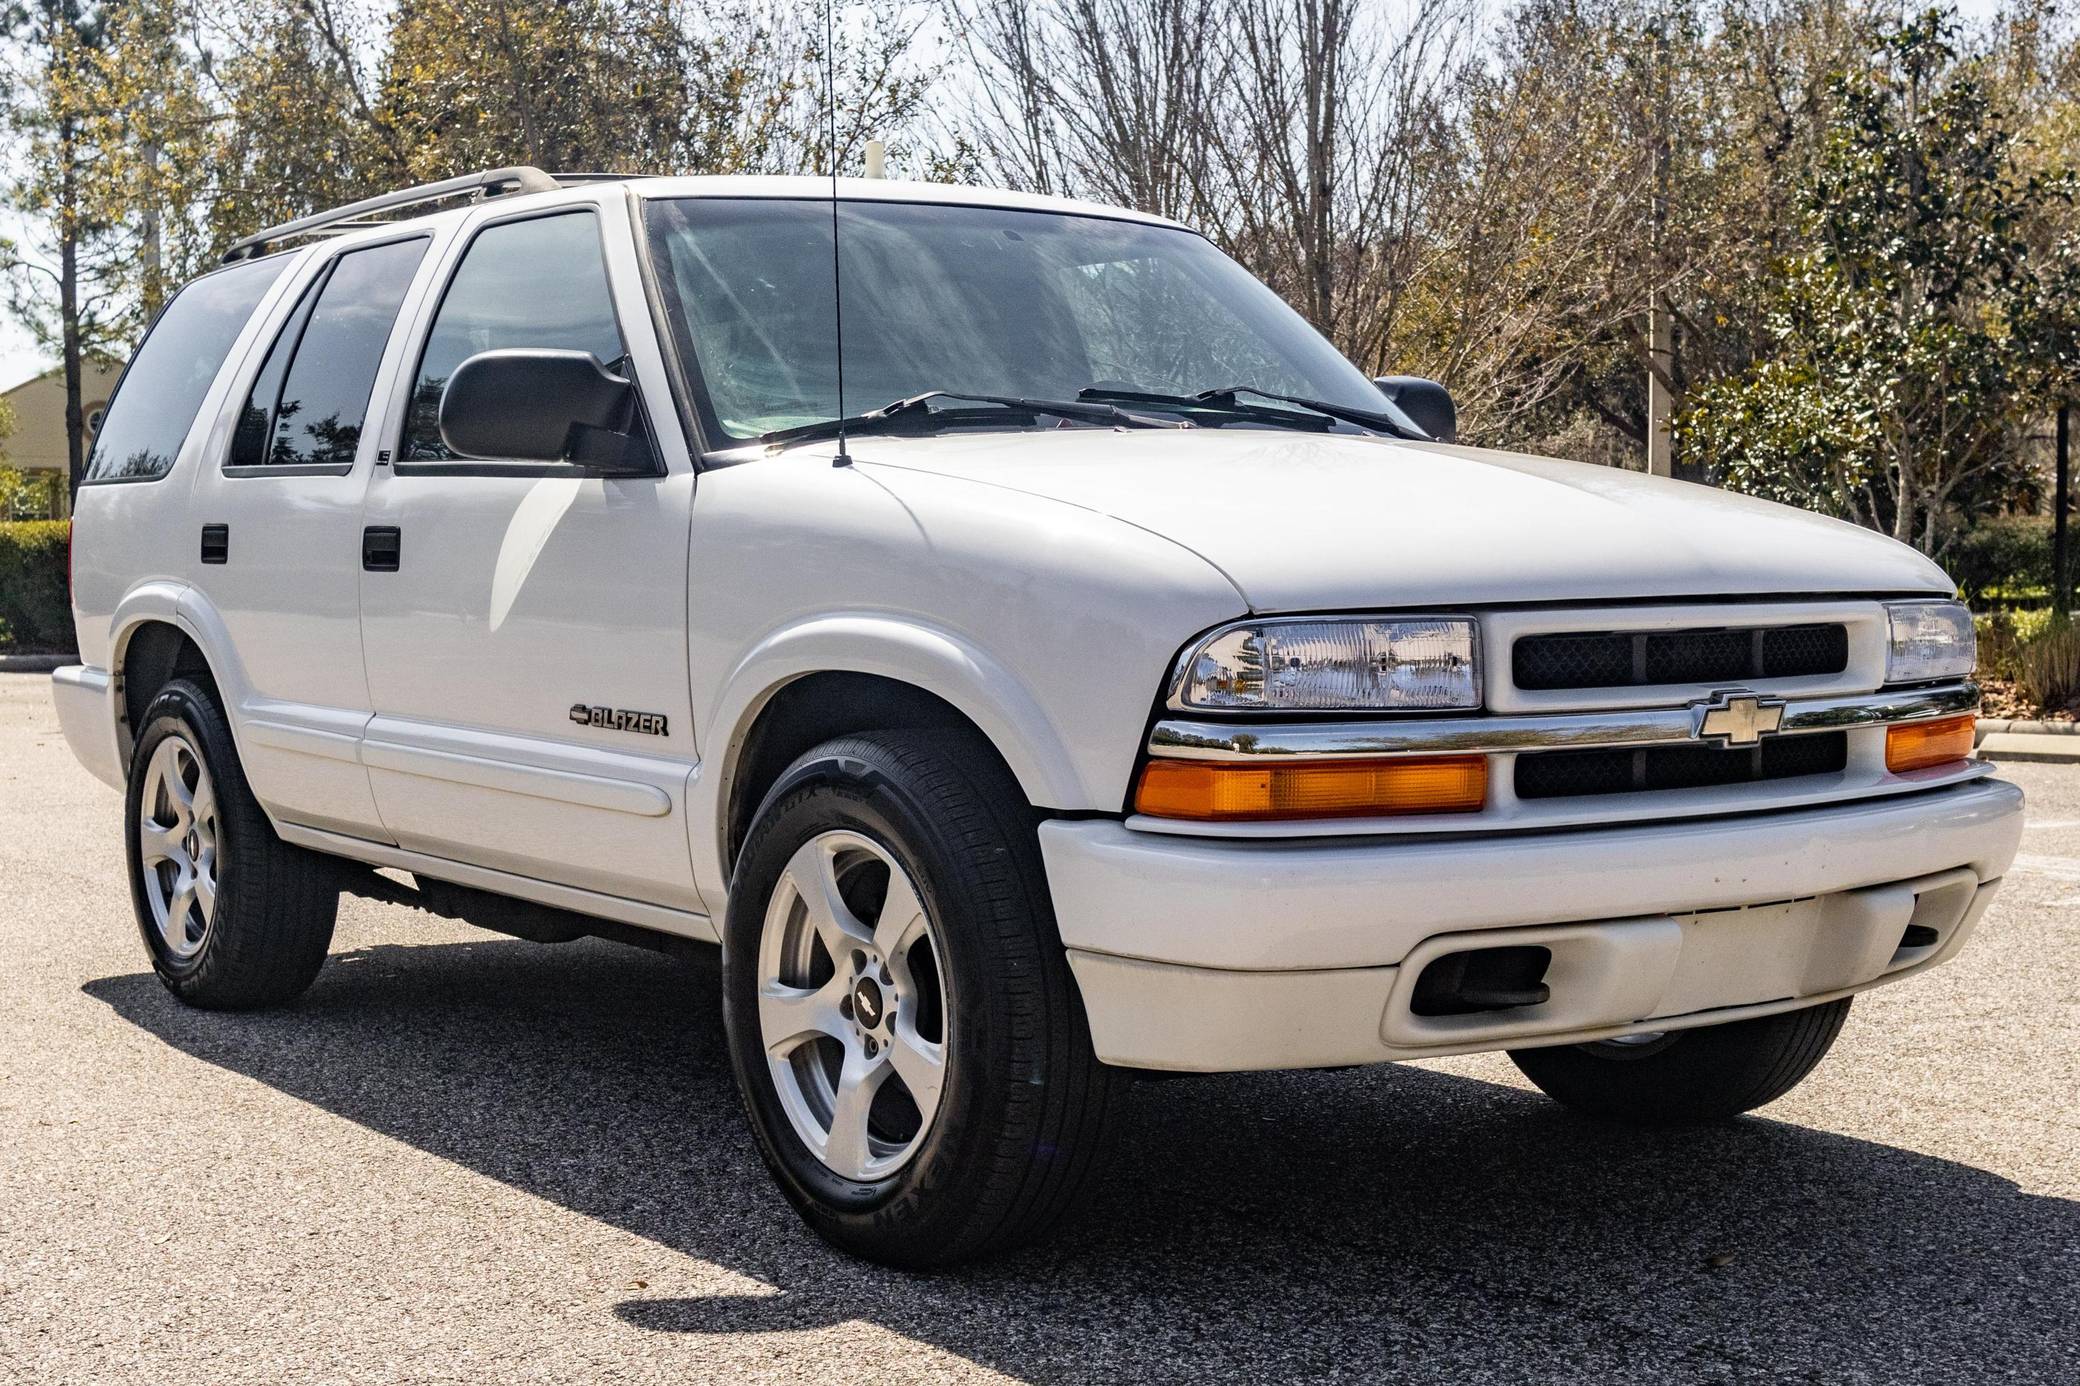 1999 Chevrolet Blazer for Sale (with Photos) - CARFAX